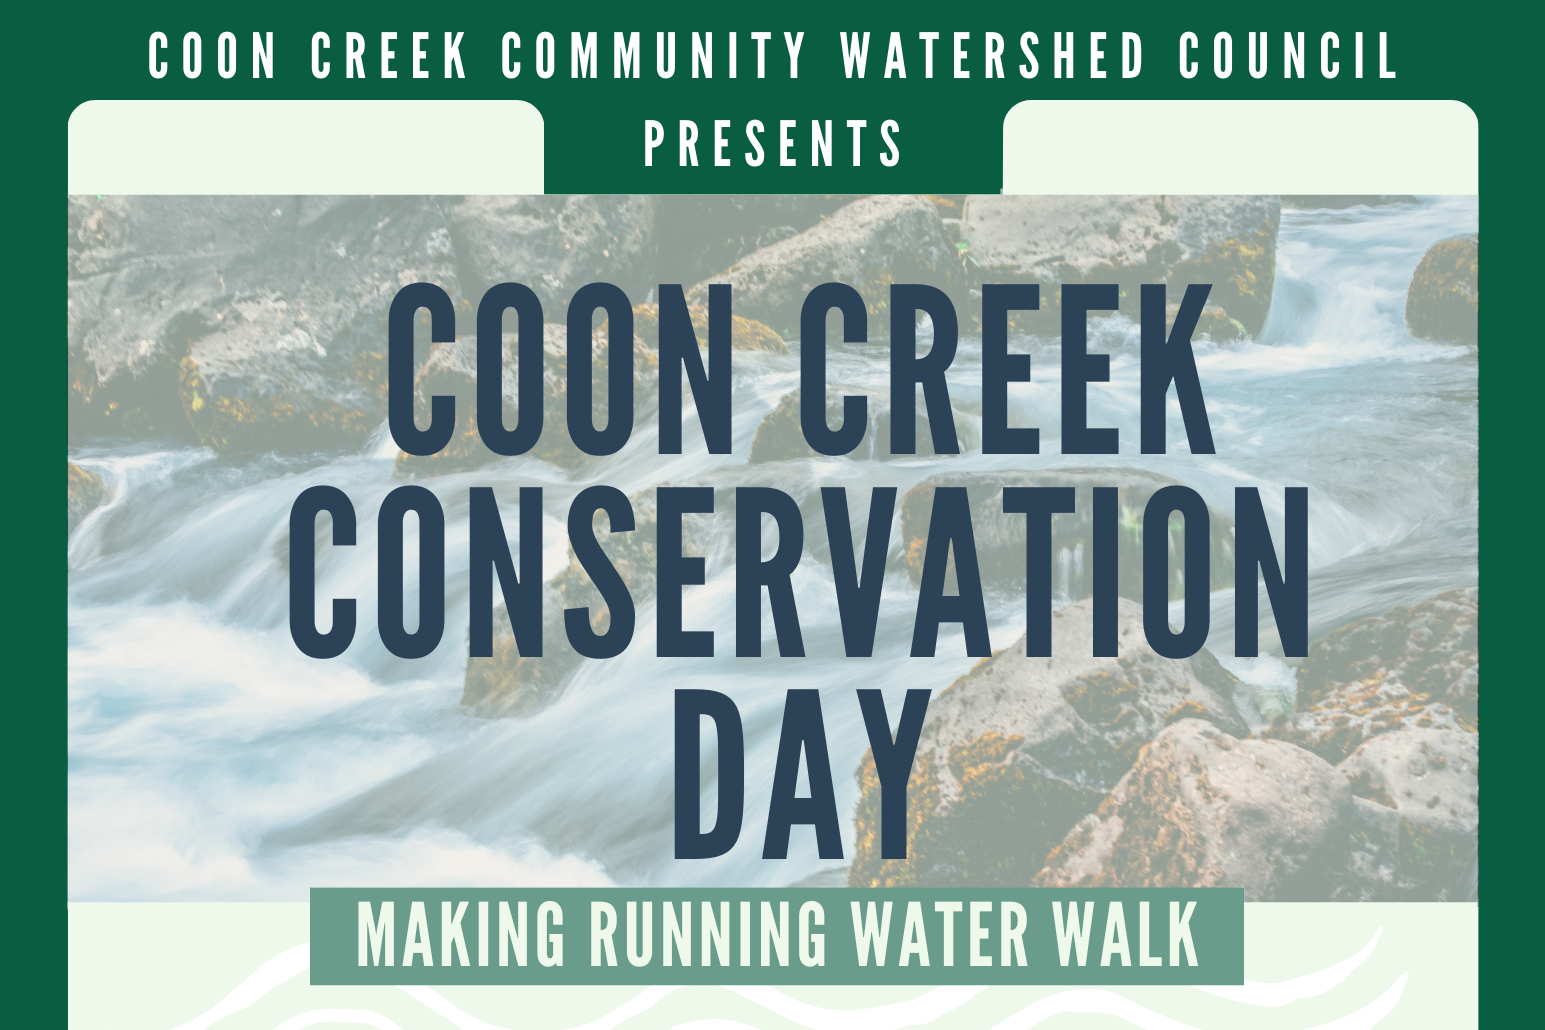 Coon Creek Community Watershed